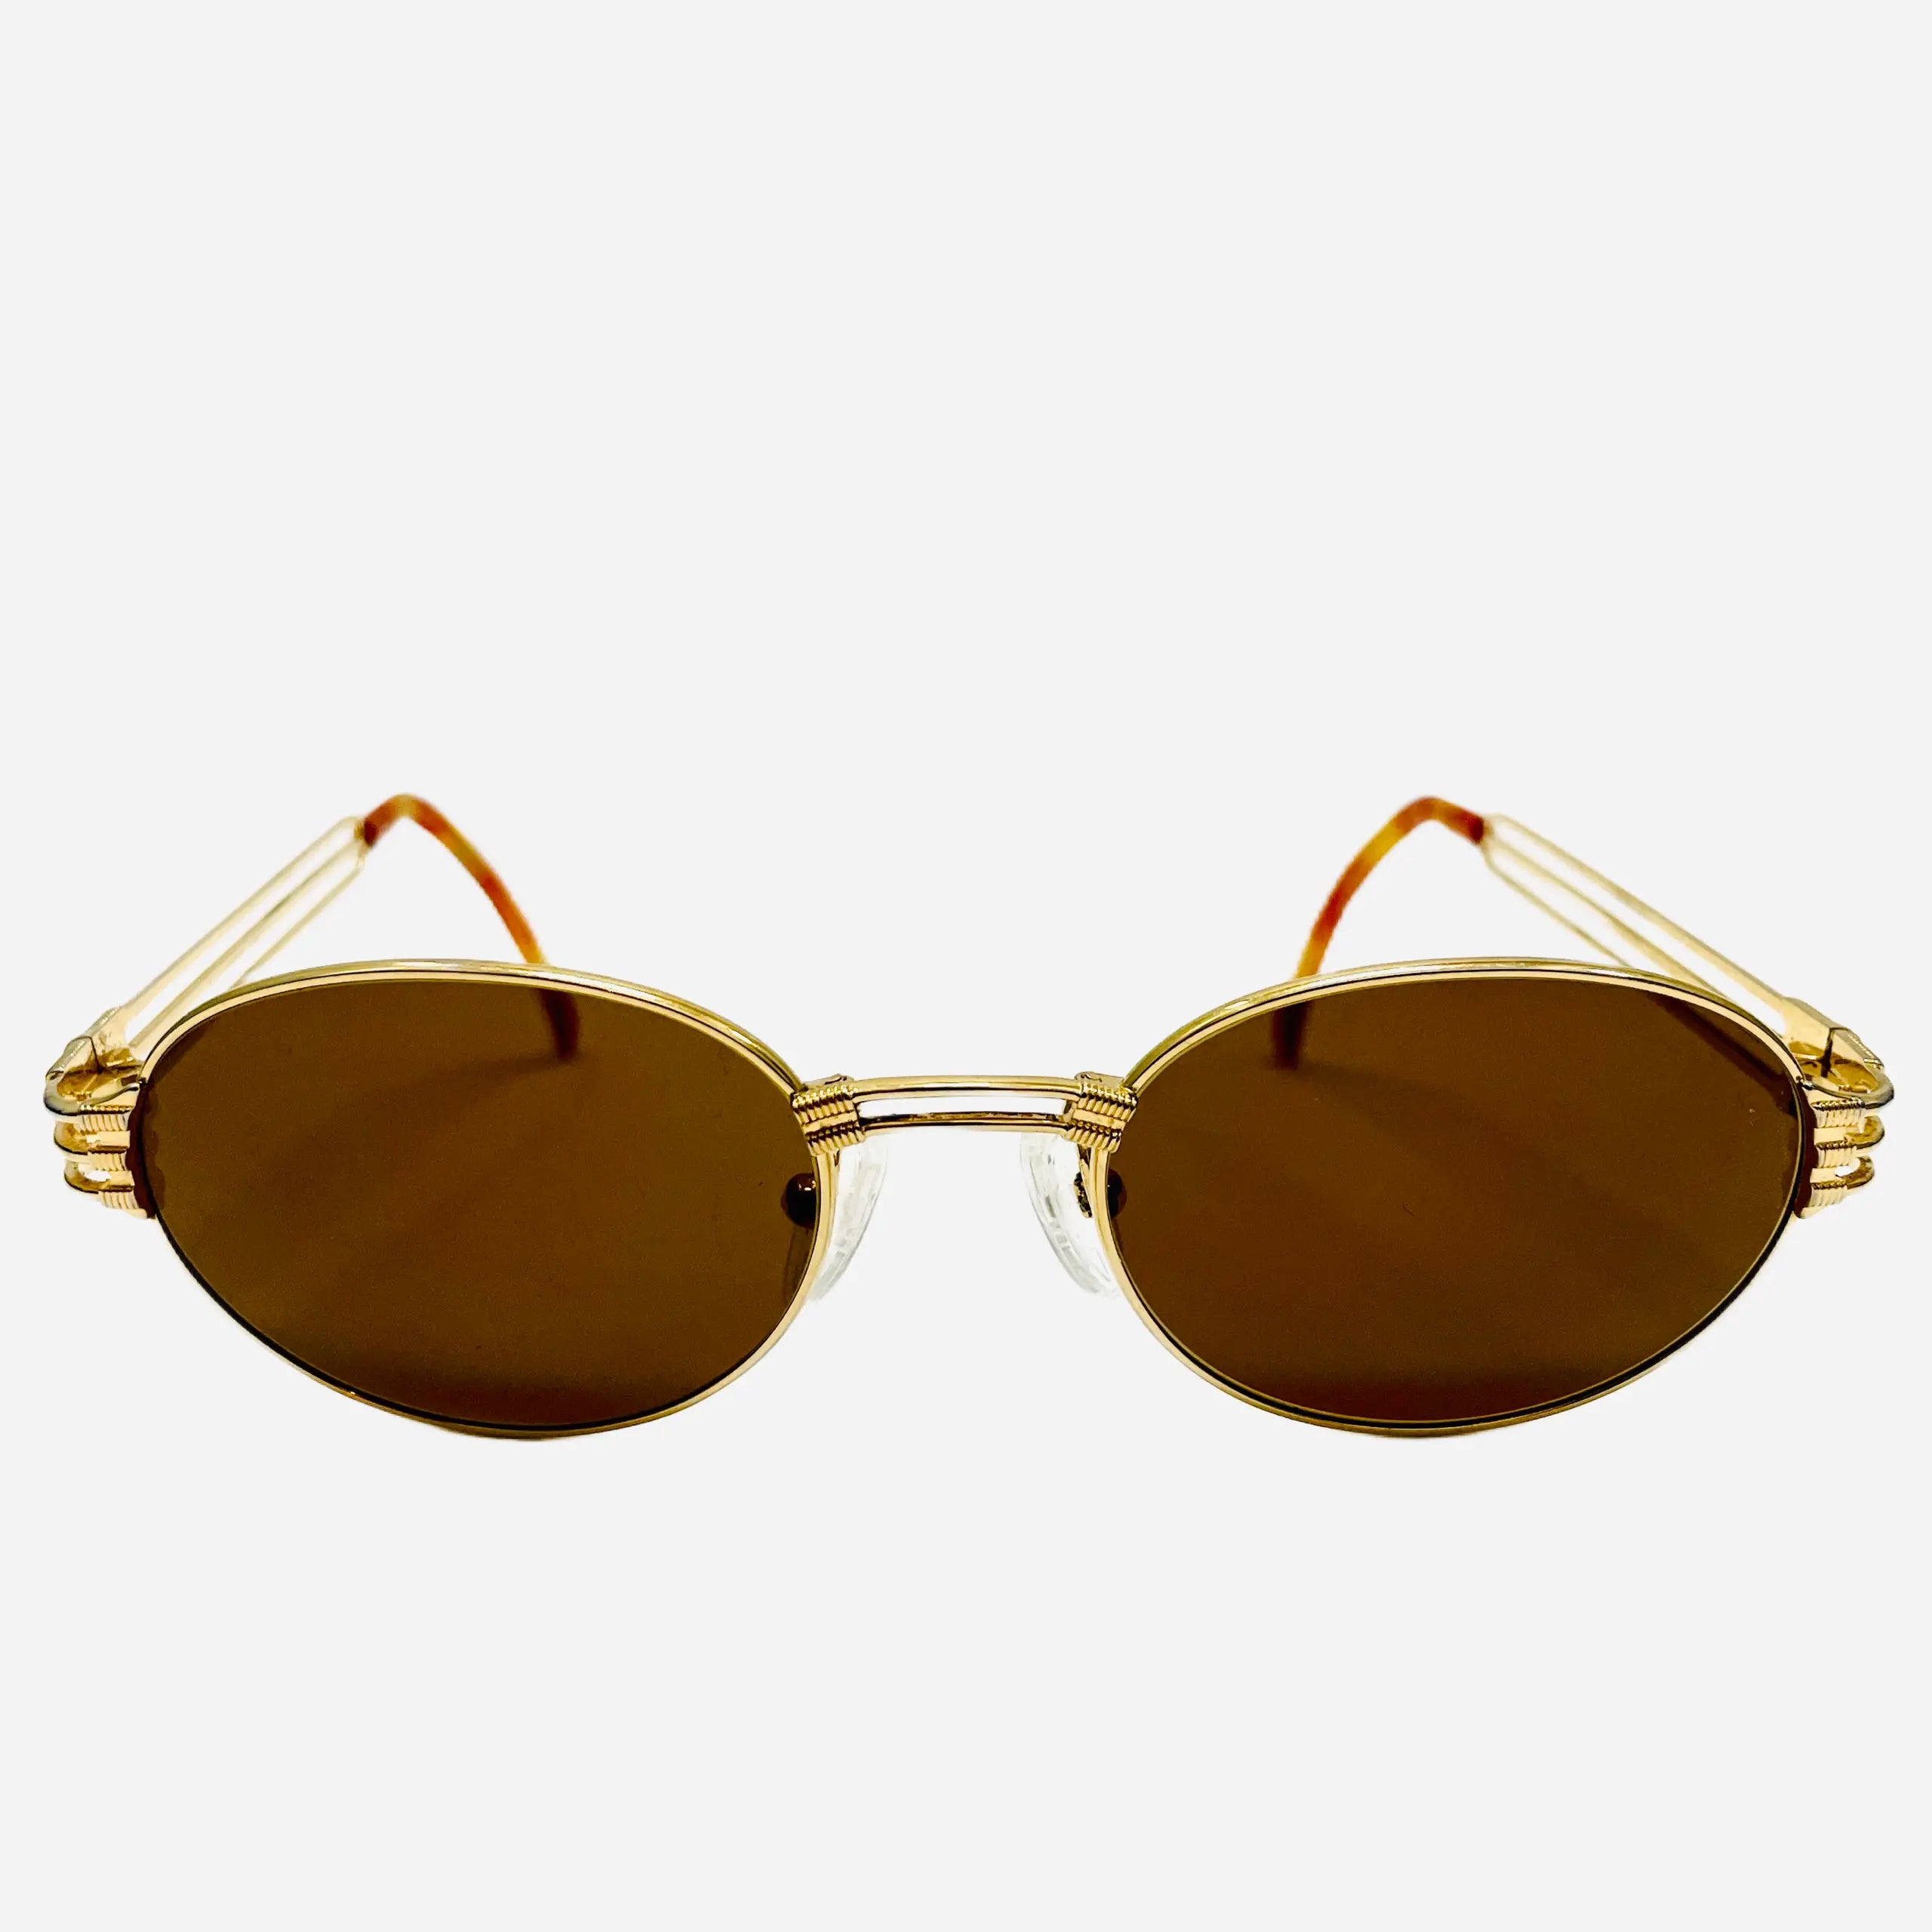 Sunglasses Jean Paul Gaultier 56-5203 90's Steampunk Shades Oval